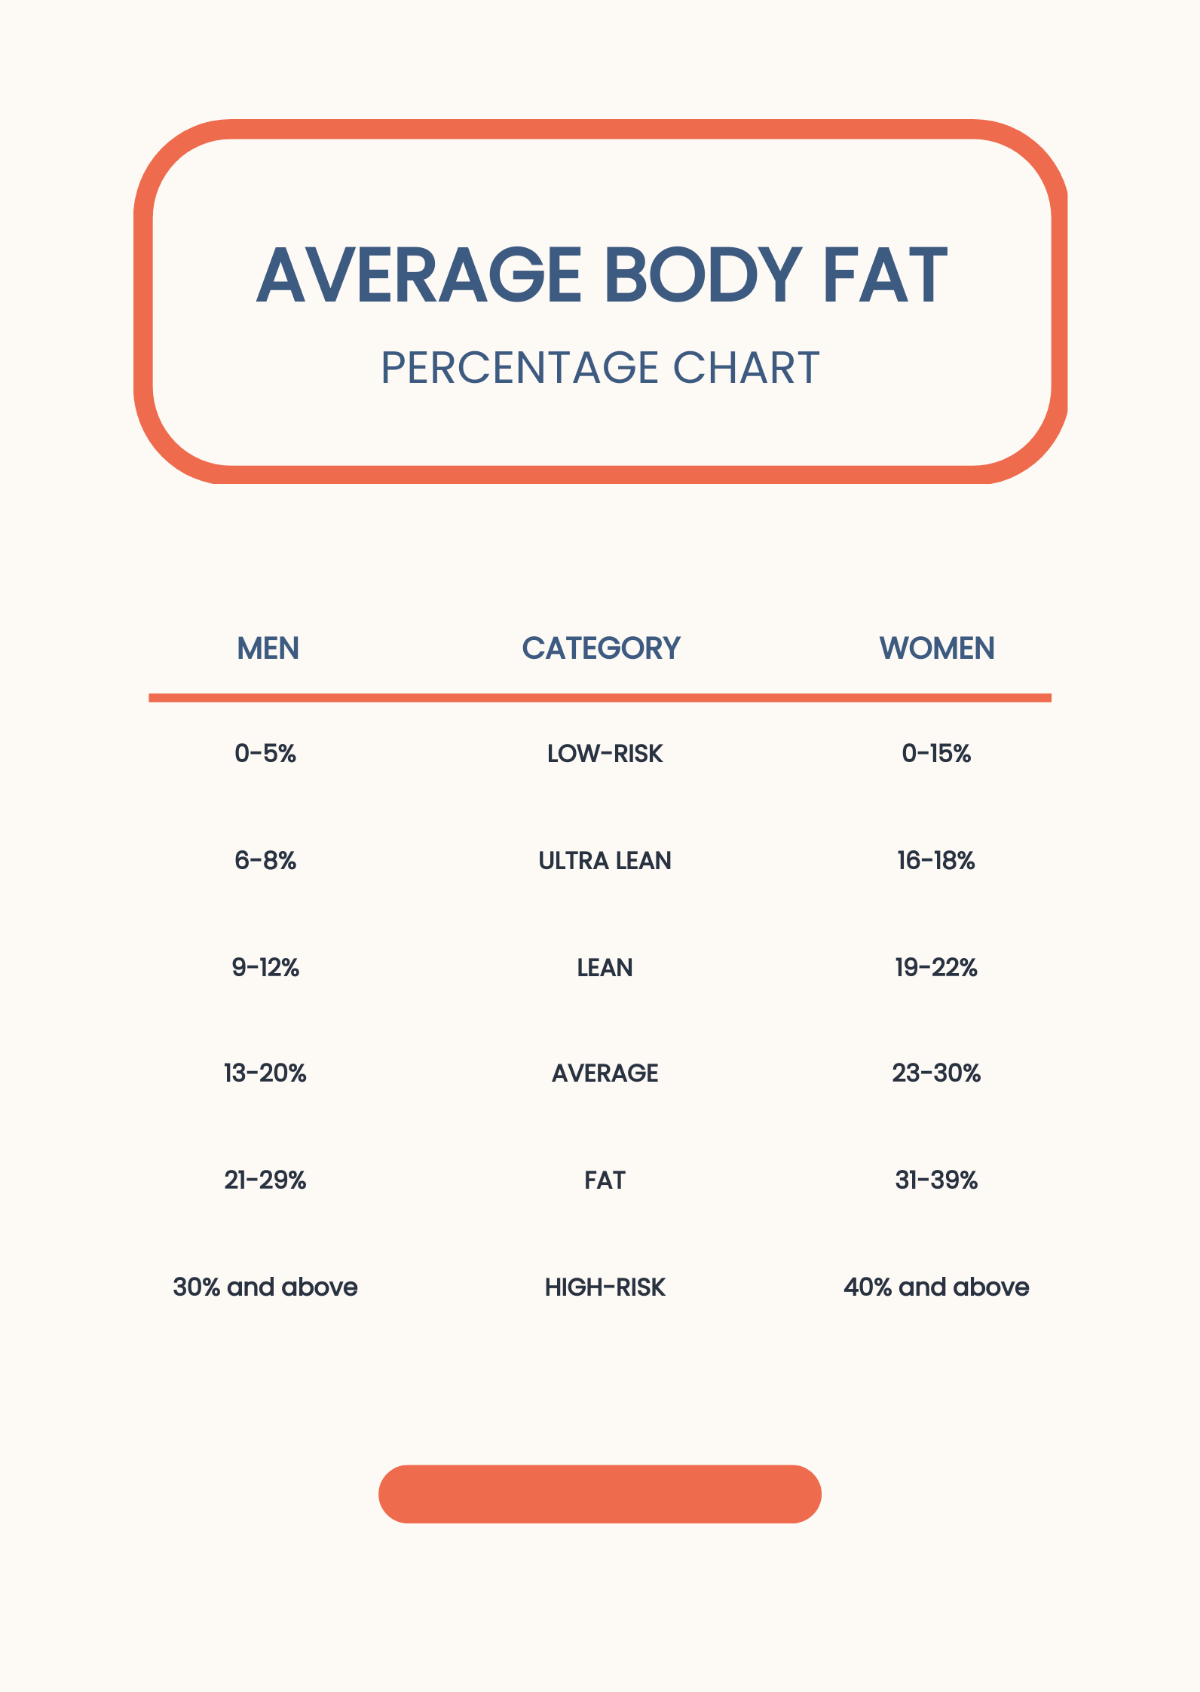 Average Body Fat Percentage Chart Template